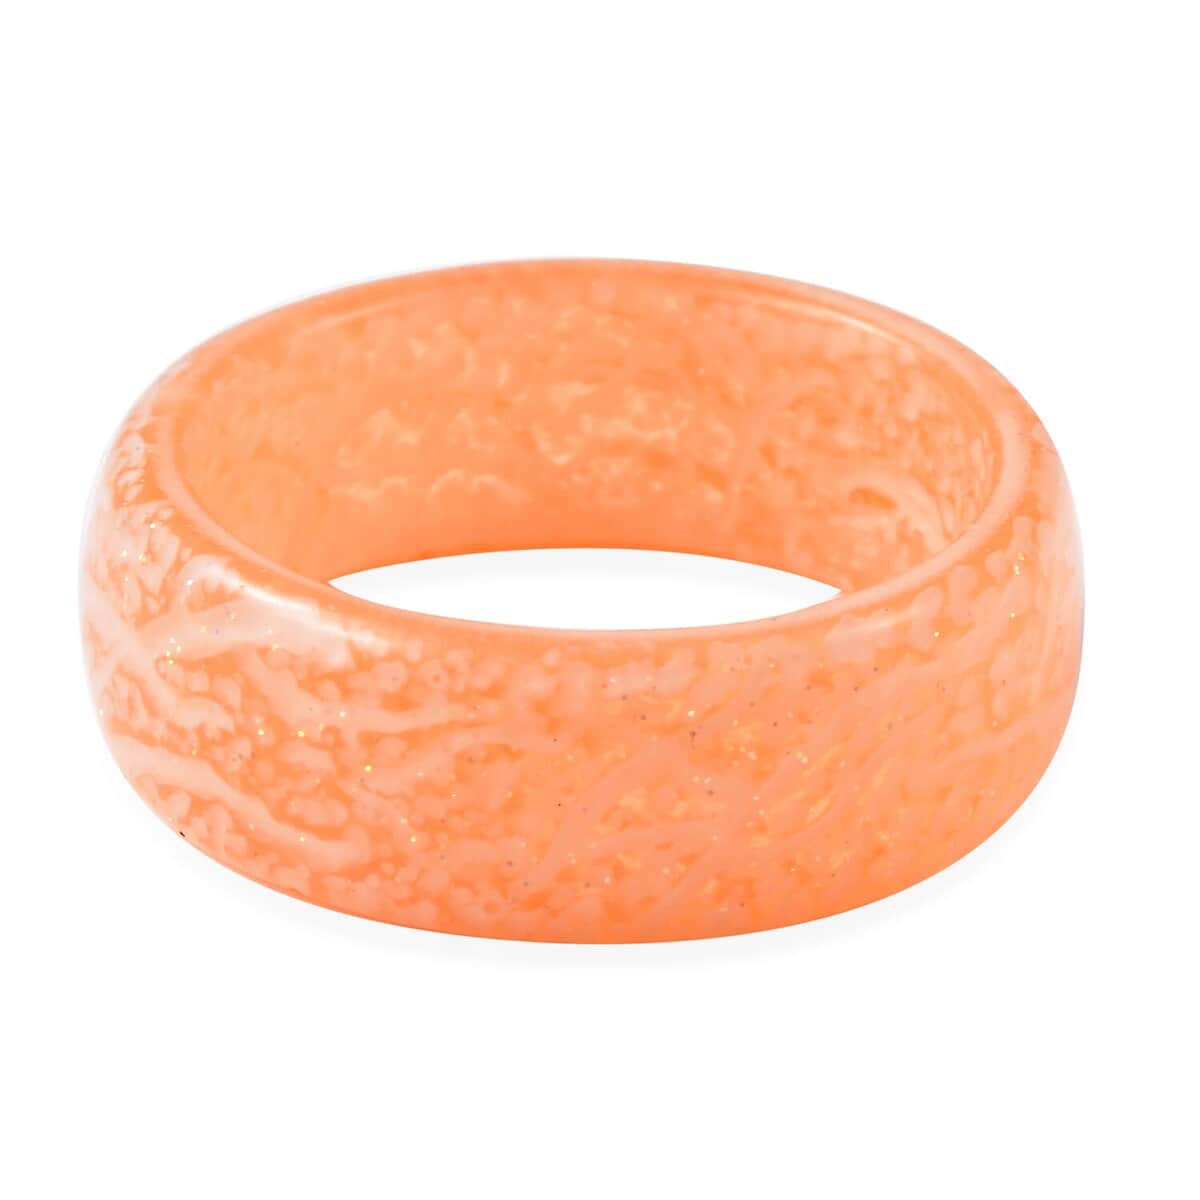 Glow in the Dark Orange Resin Band Ring (Size 6.0) image number 4